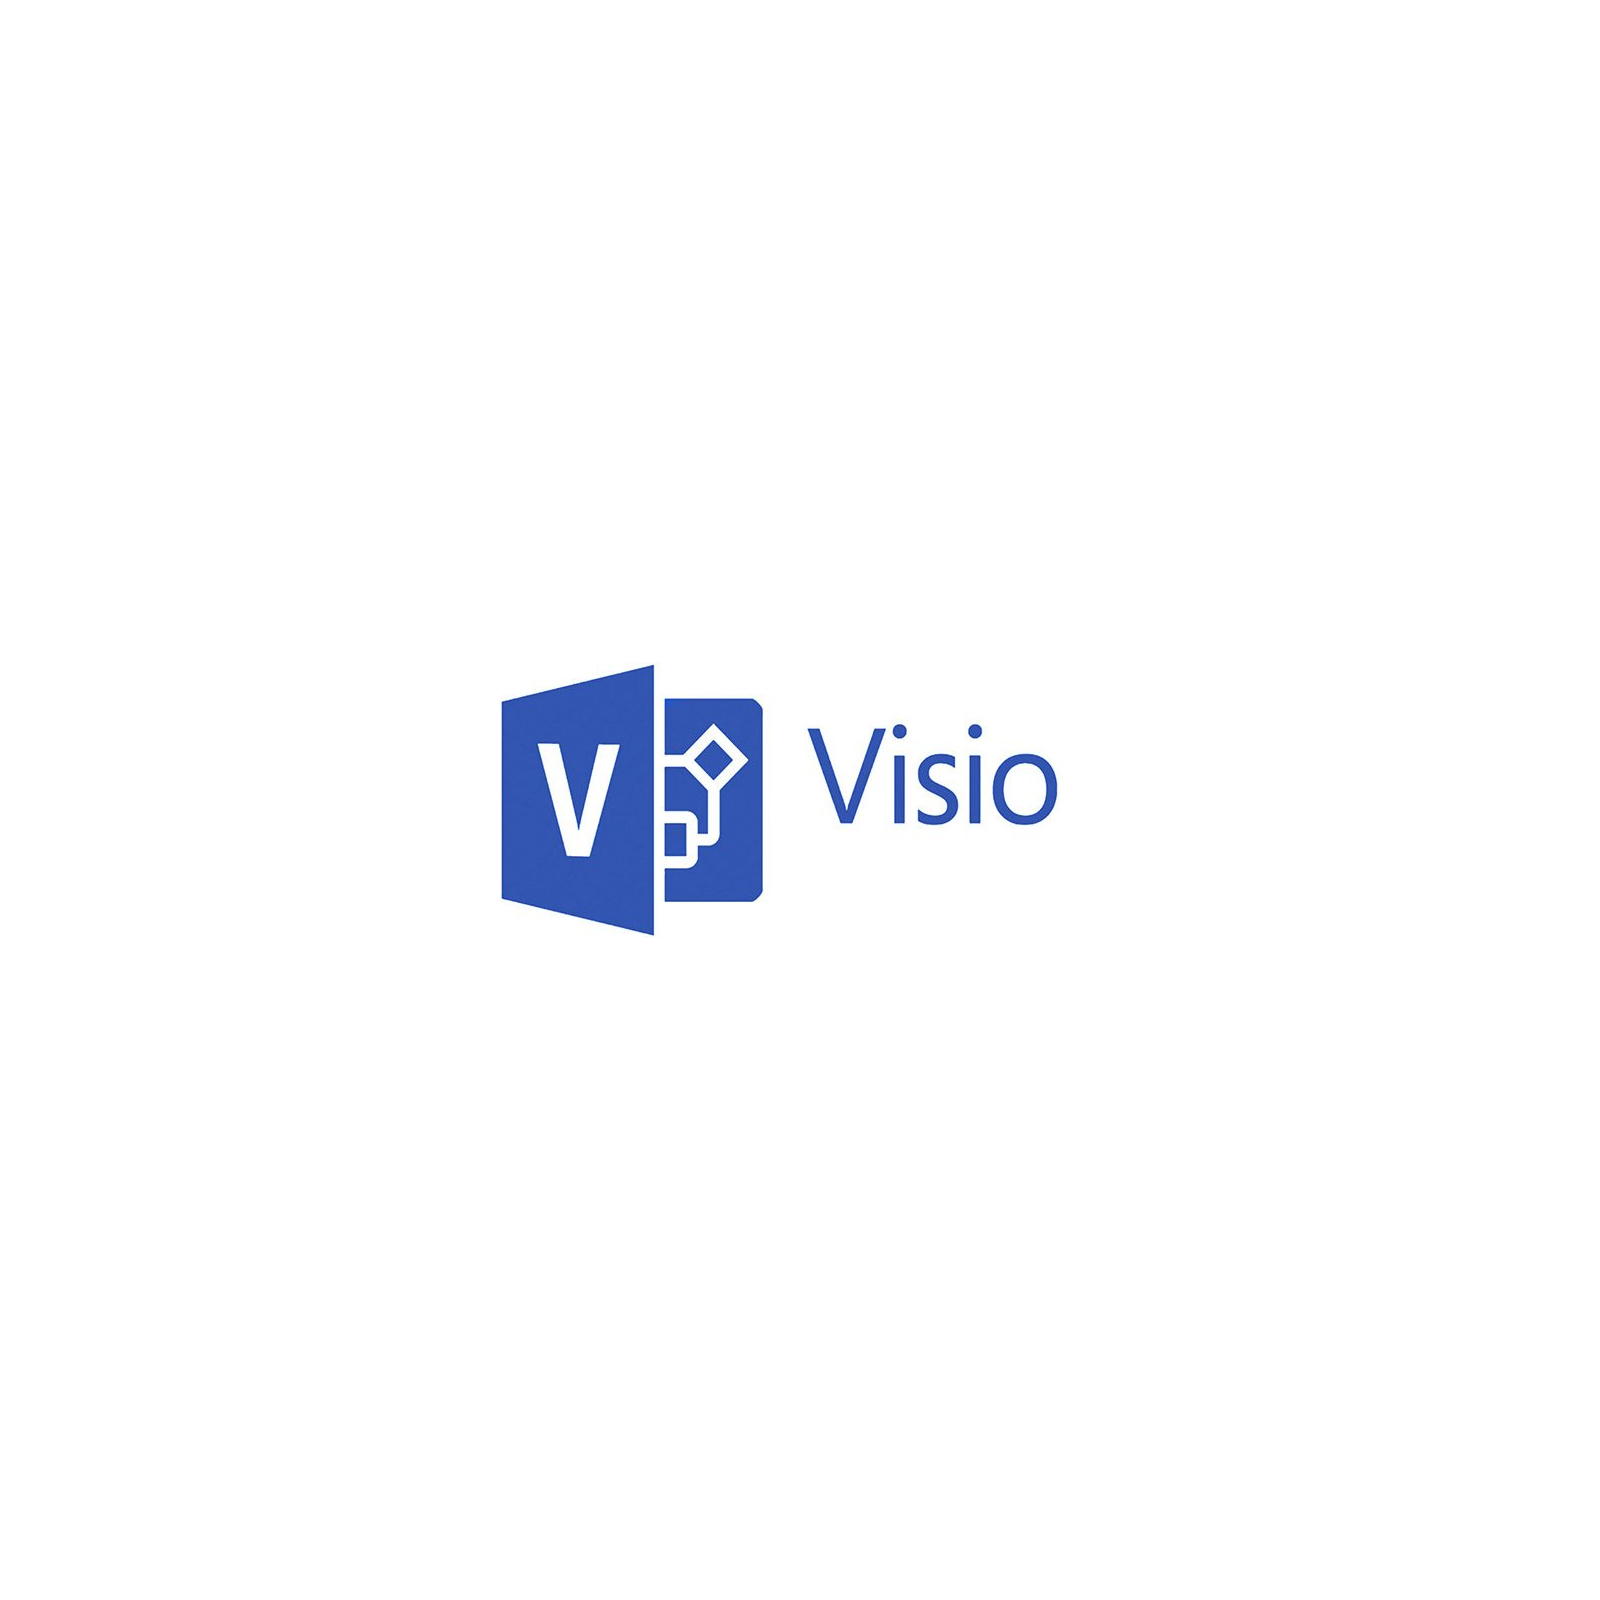 Программная продукция Microsoft VisioStd 2016 SNGL OLP NL Acdmc (D86-05695)